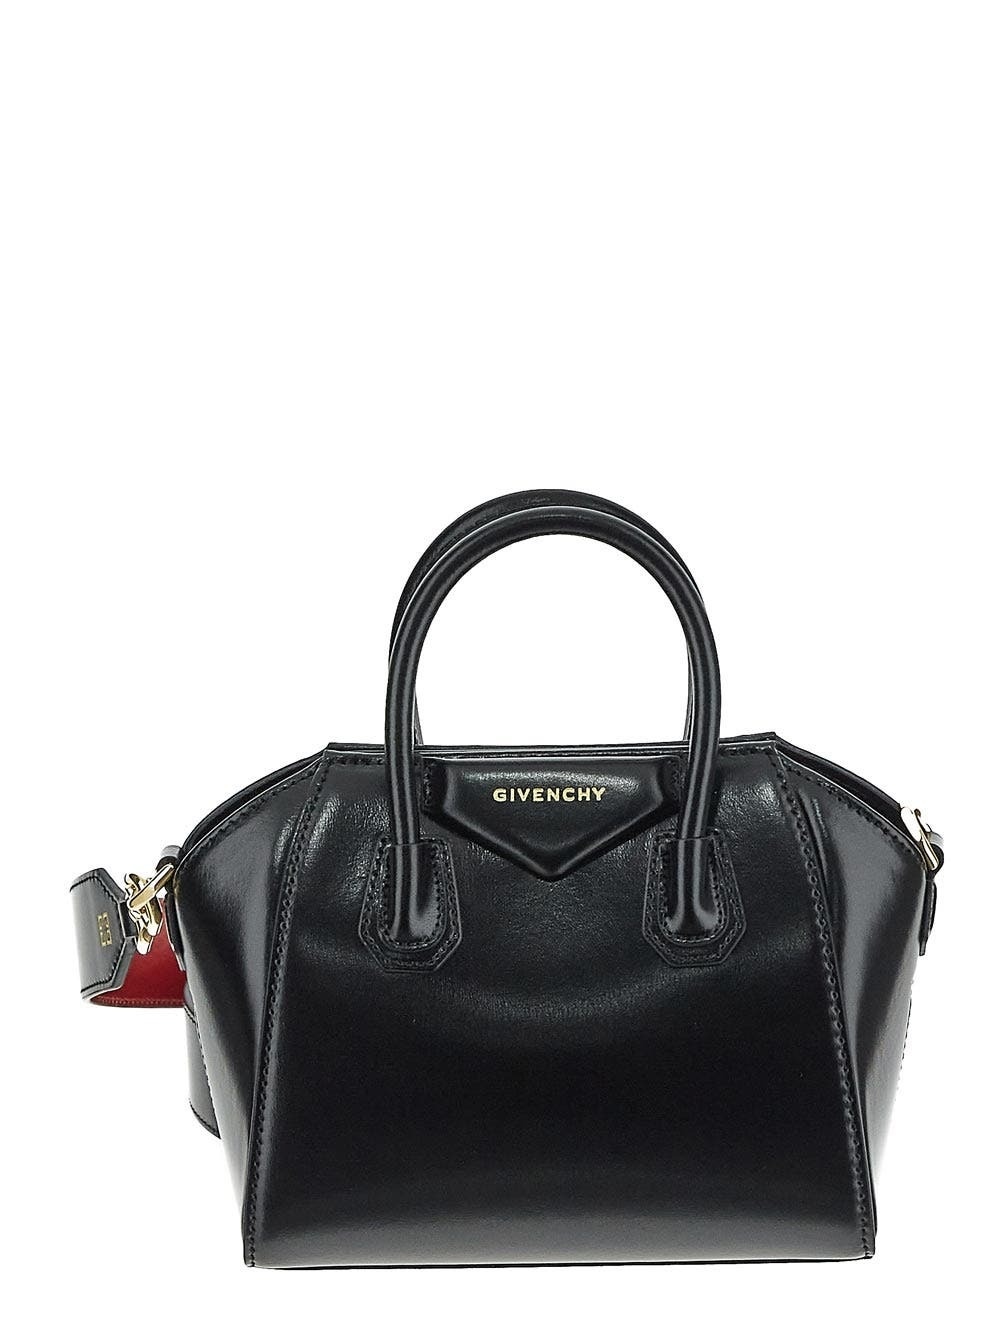 Photo: Givenchy Antigona Toy Bag